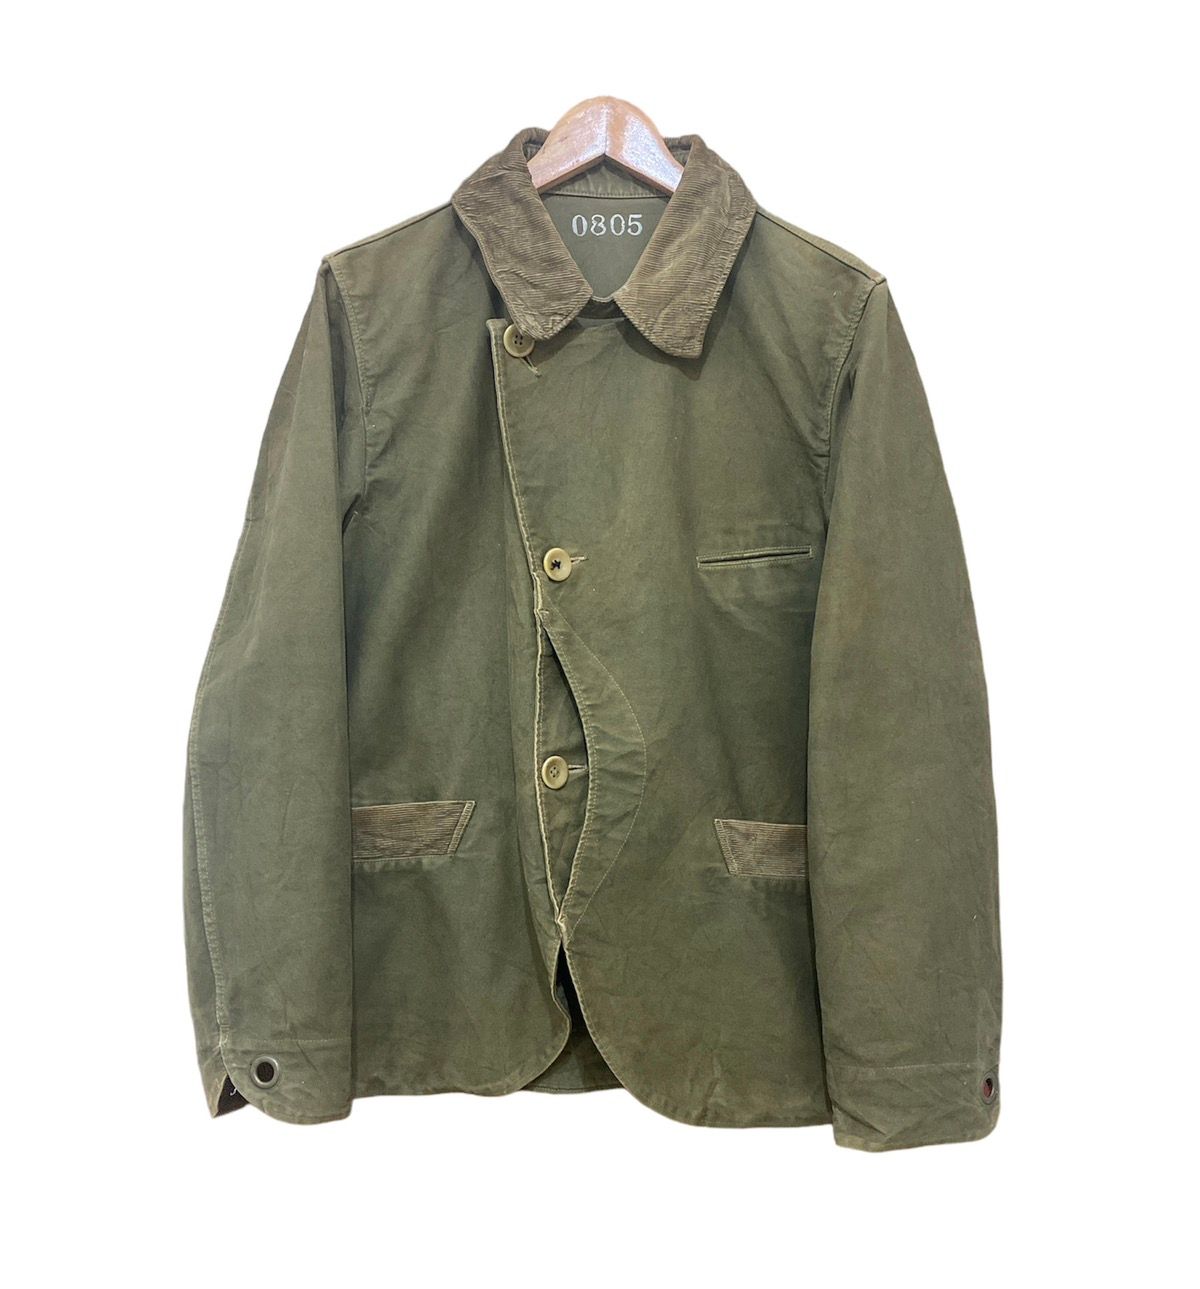 Kapital Military Rare Design Fashion Jacket - 1